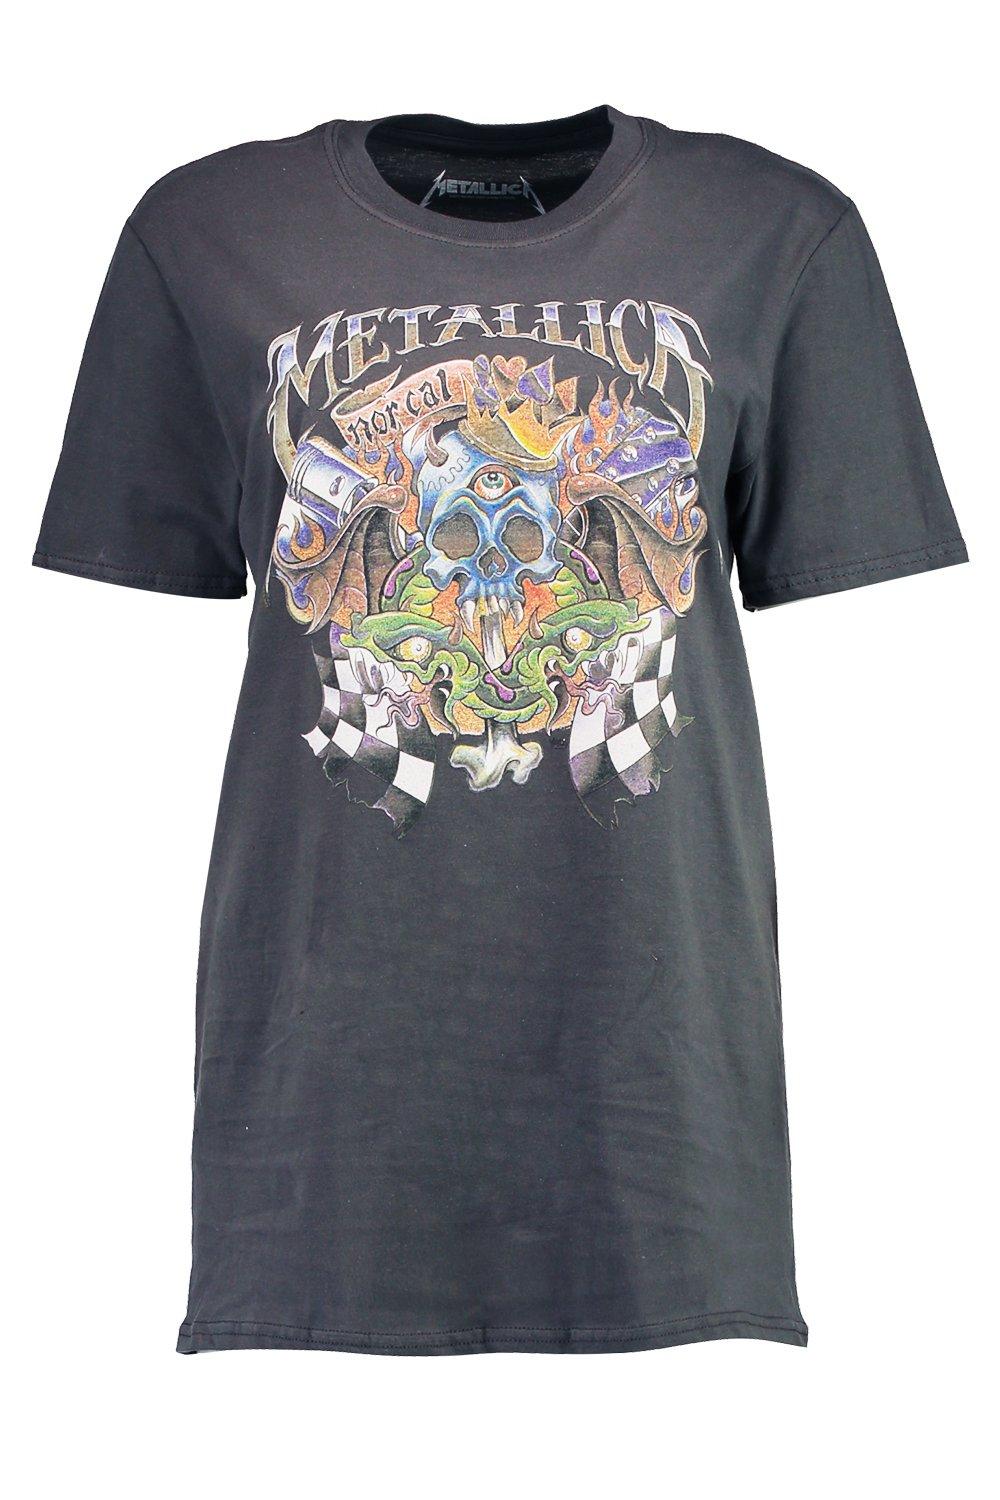 Boohoo Womens Adriana Metallica Washed Out Band T-Shirt | eBay